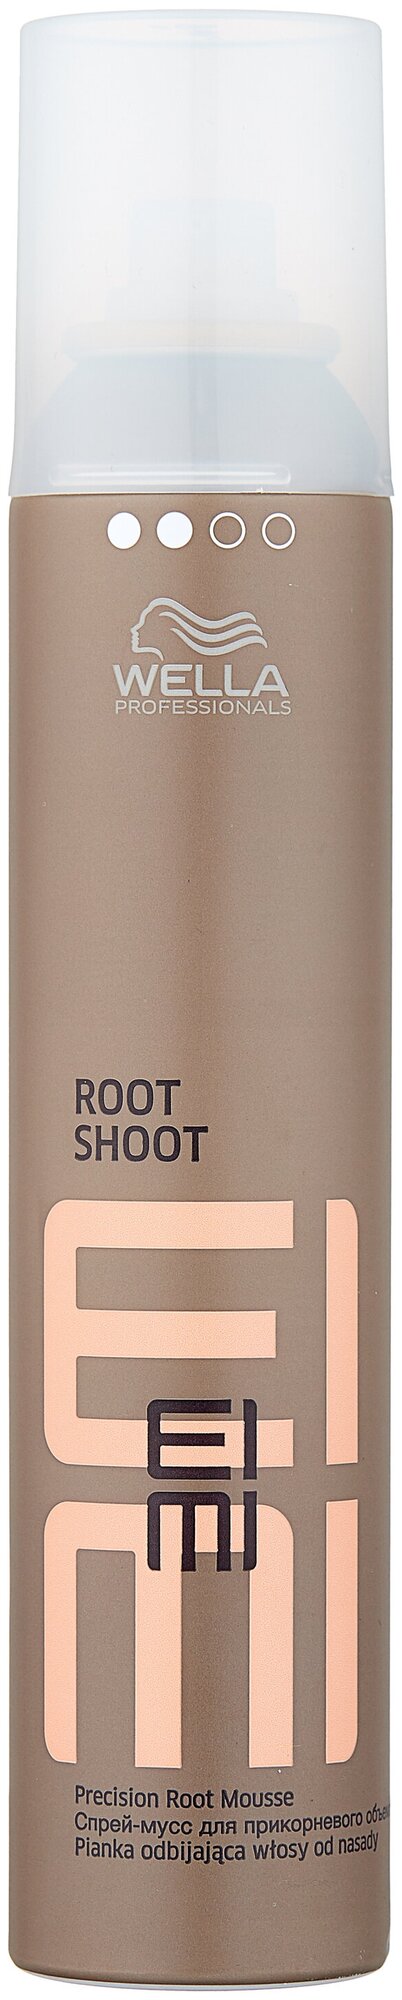 Wella Professionals Eimi Root Shoot Спрей-мусс для прикорневого объема, 200 мл